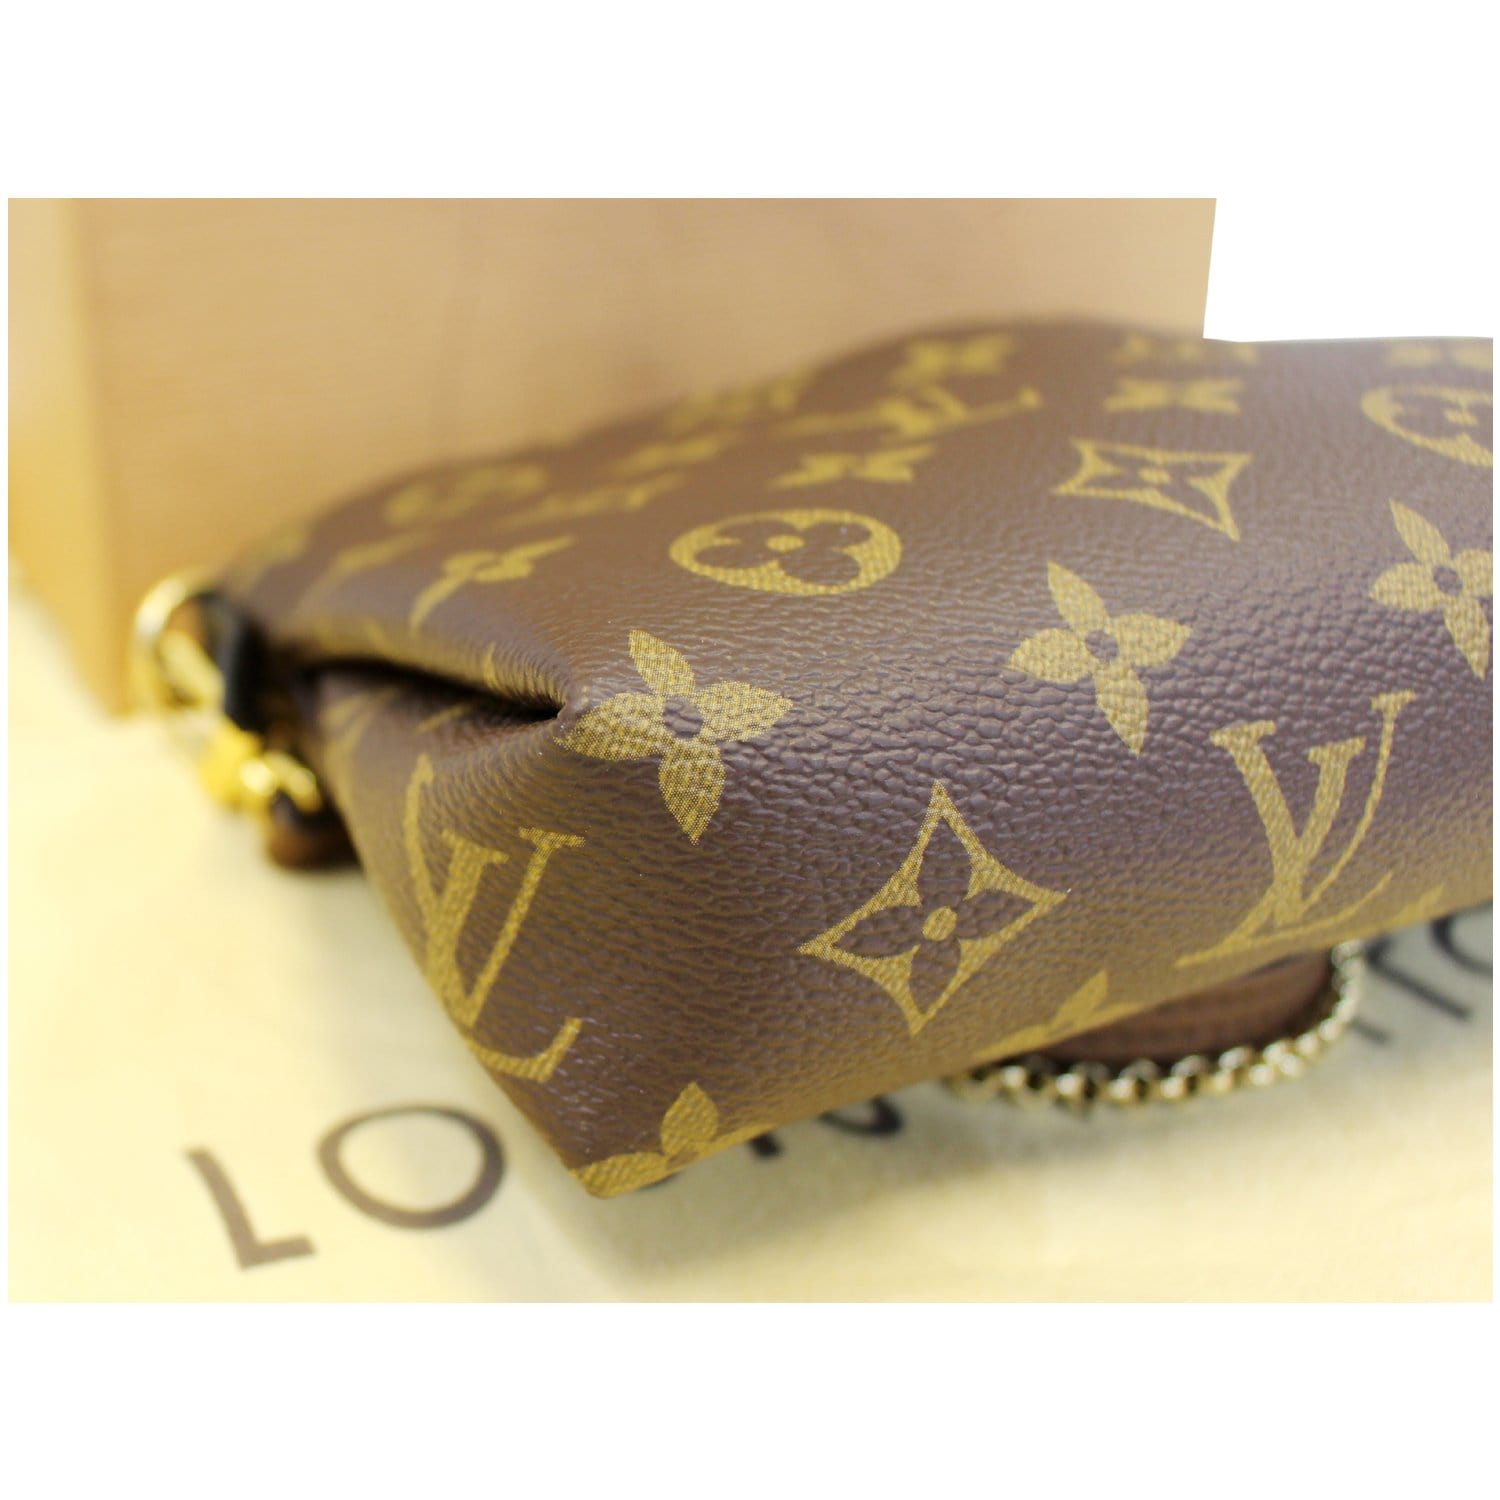 Clutch bag Louis Vuitton Purple in Synthetic - 27917547